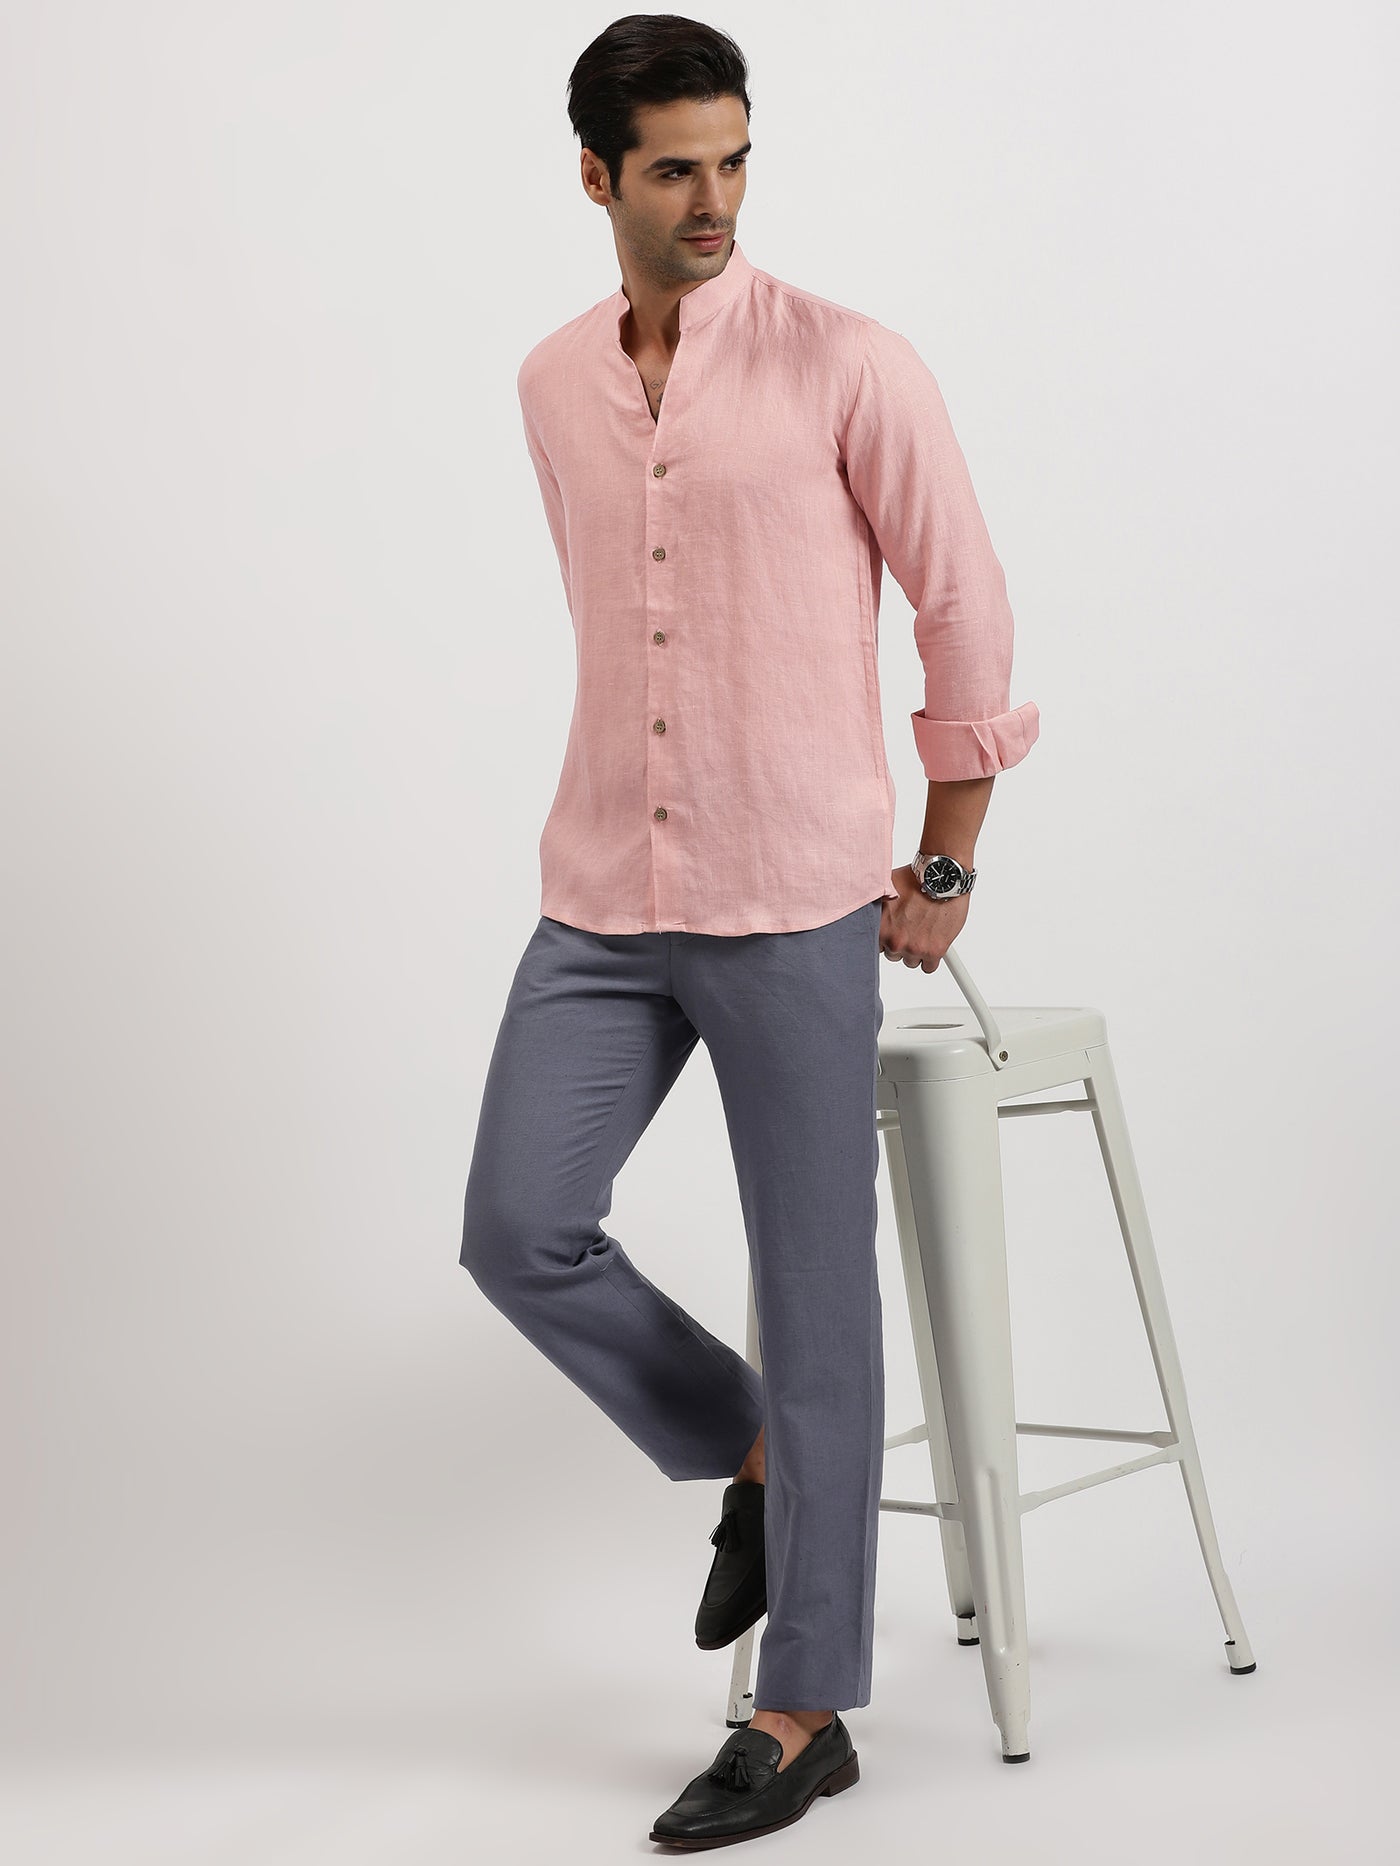 Craig - Pure Linen V Neck Full Sleeve Shirt - Salmon Pink